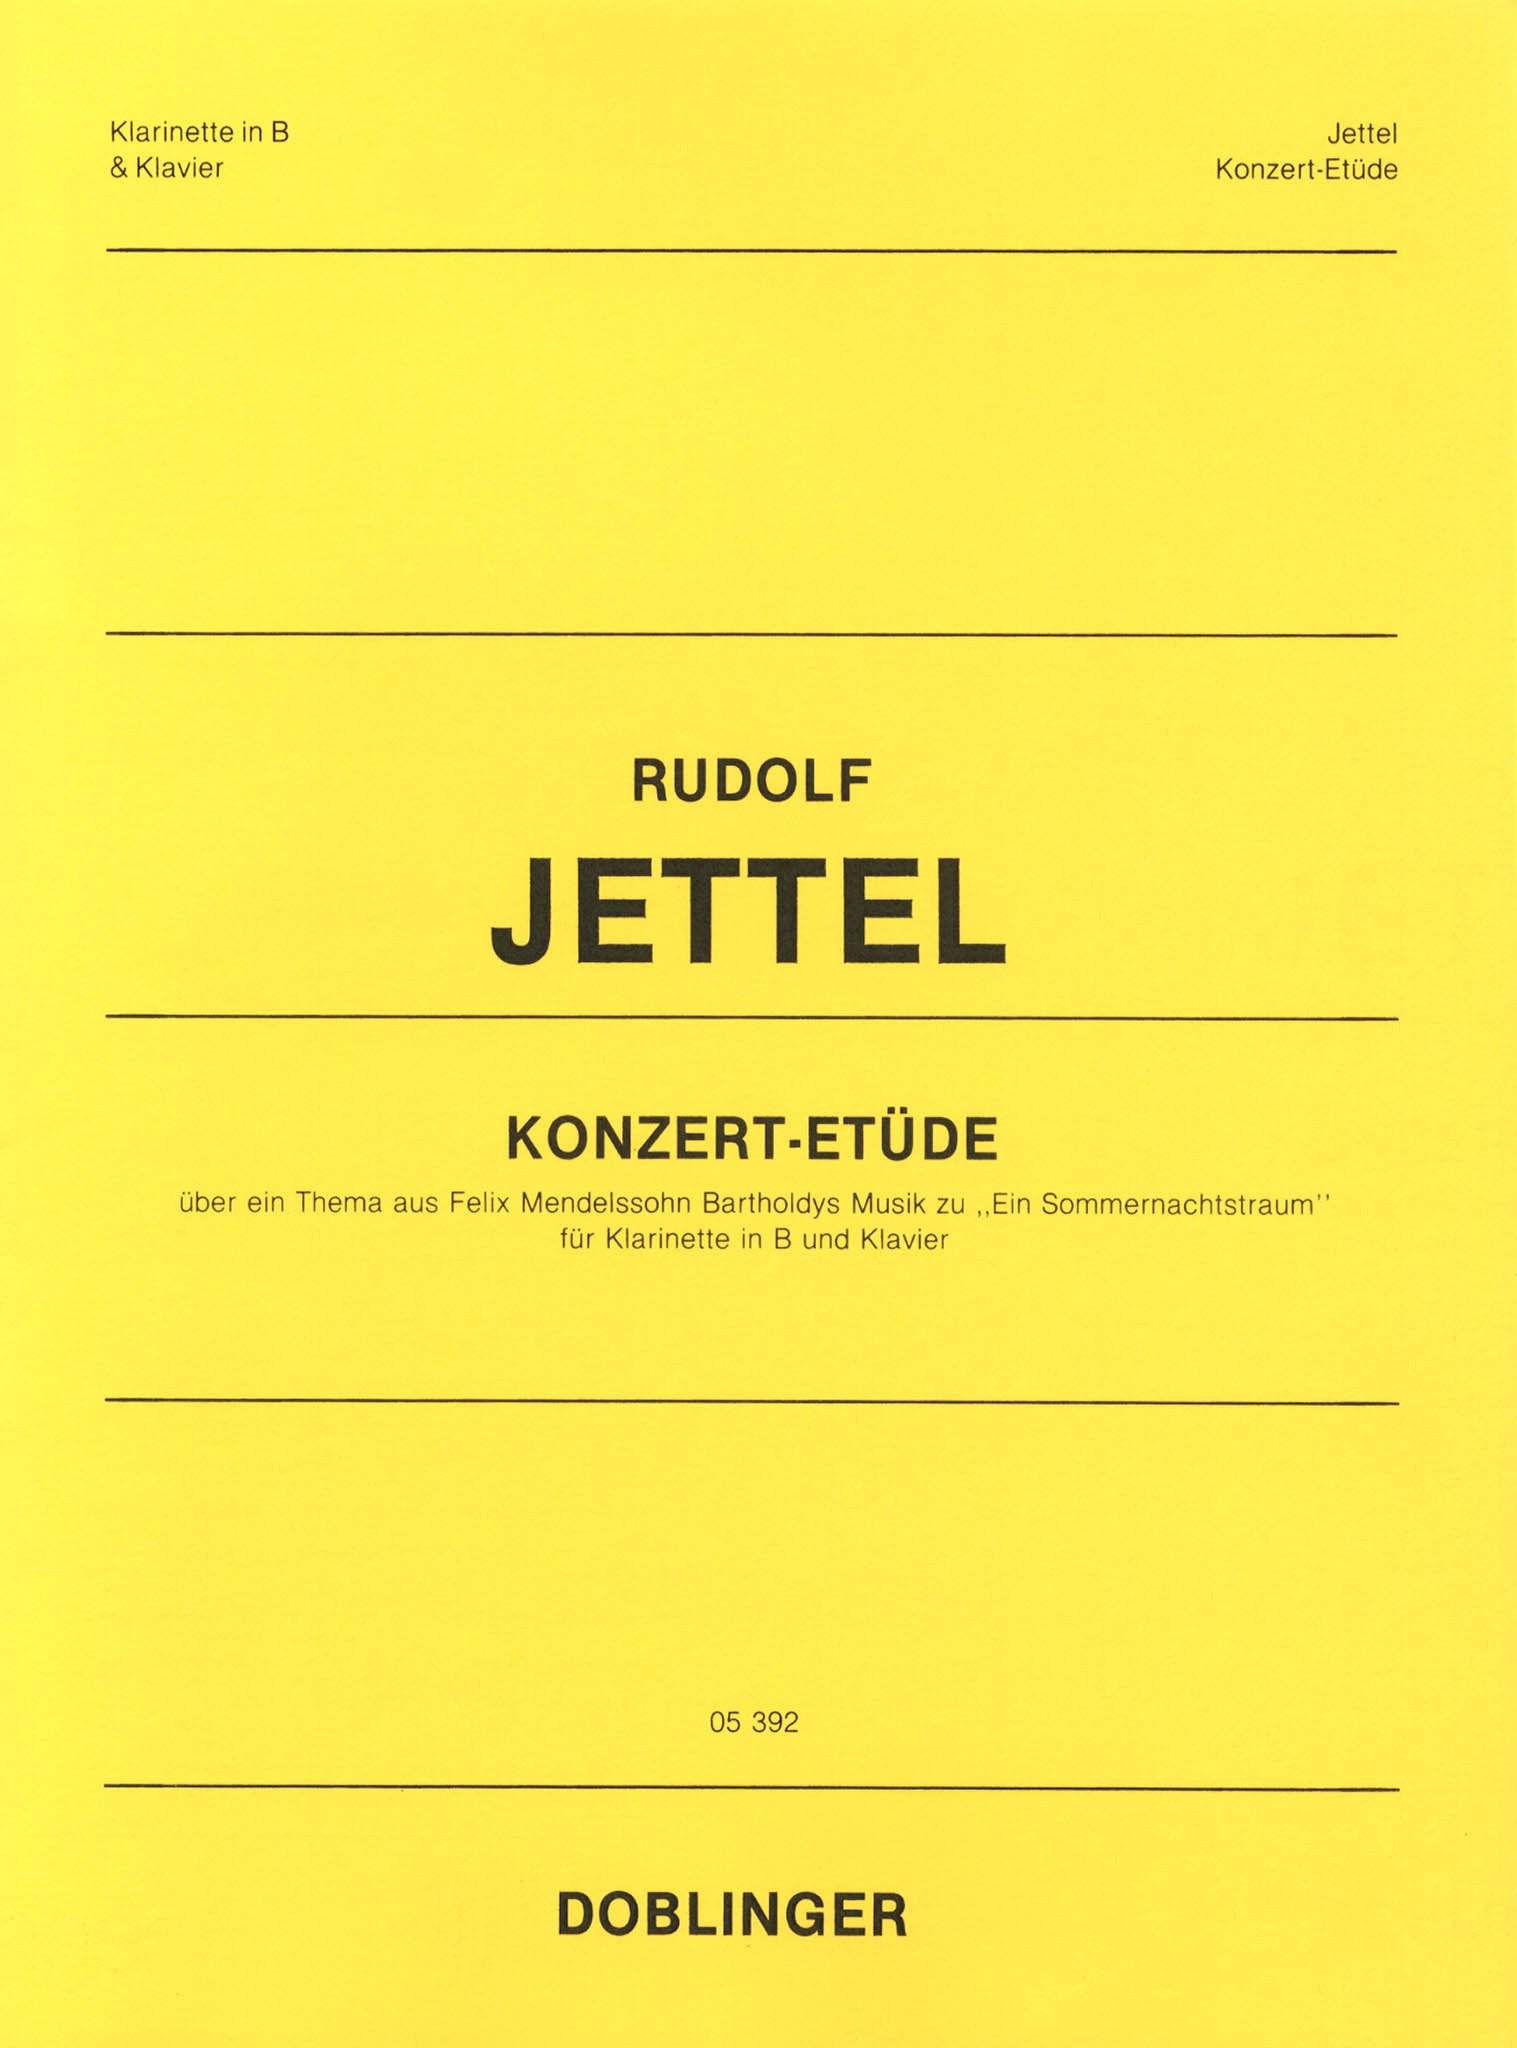 Jettel: Concert Etude on the Scherzo from Midsummer Night's Dream